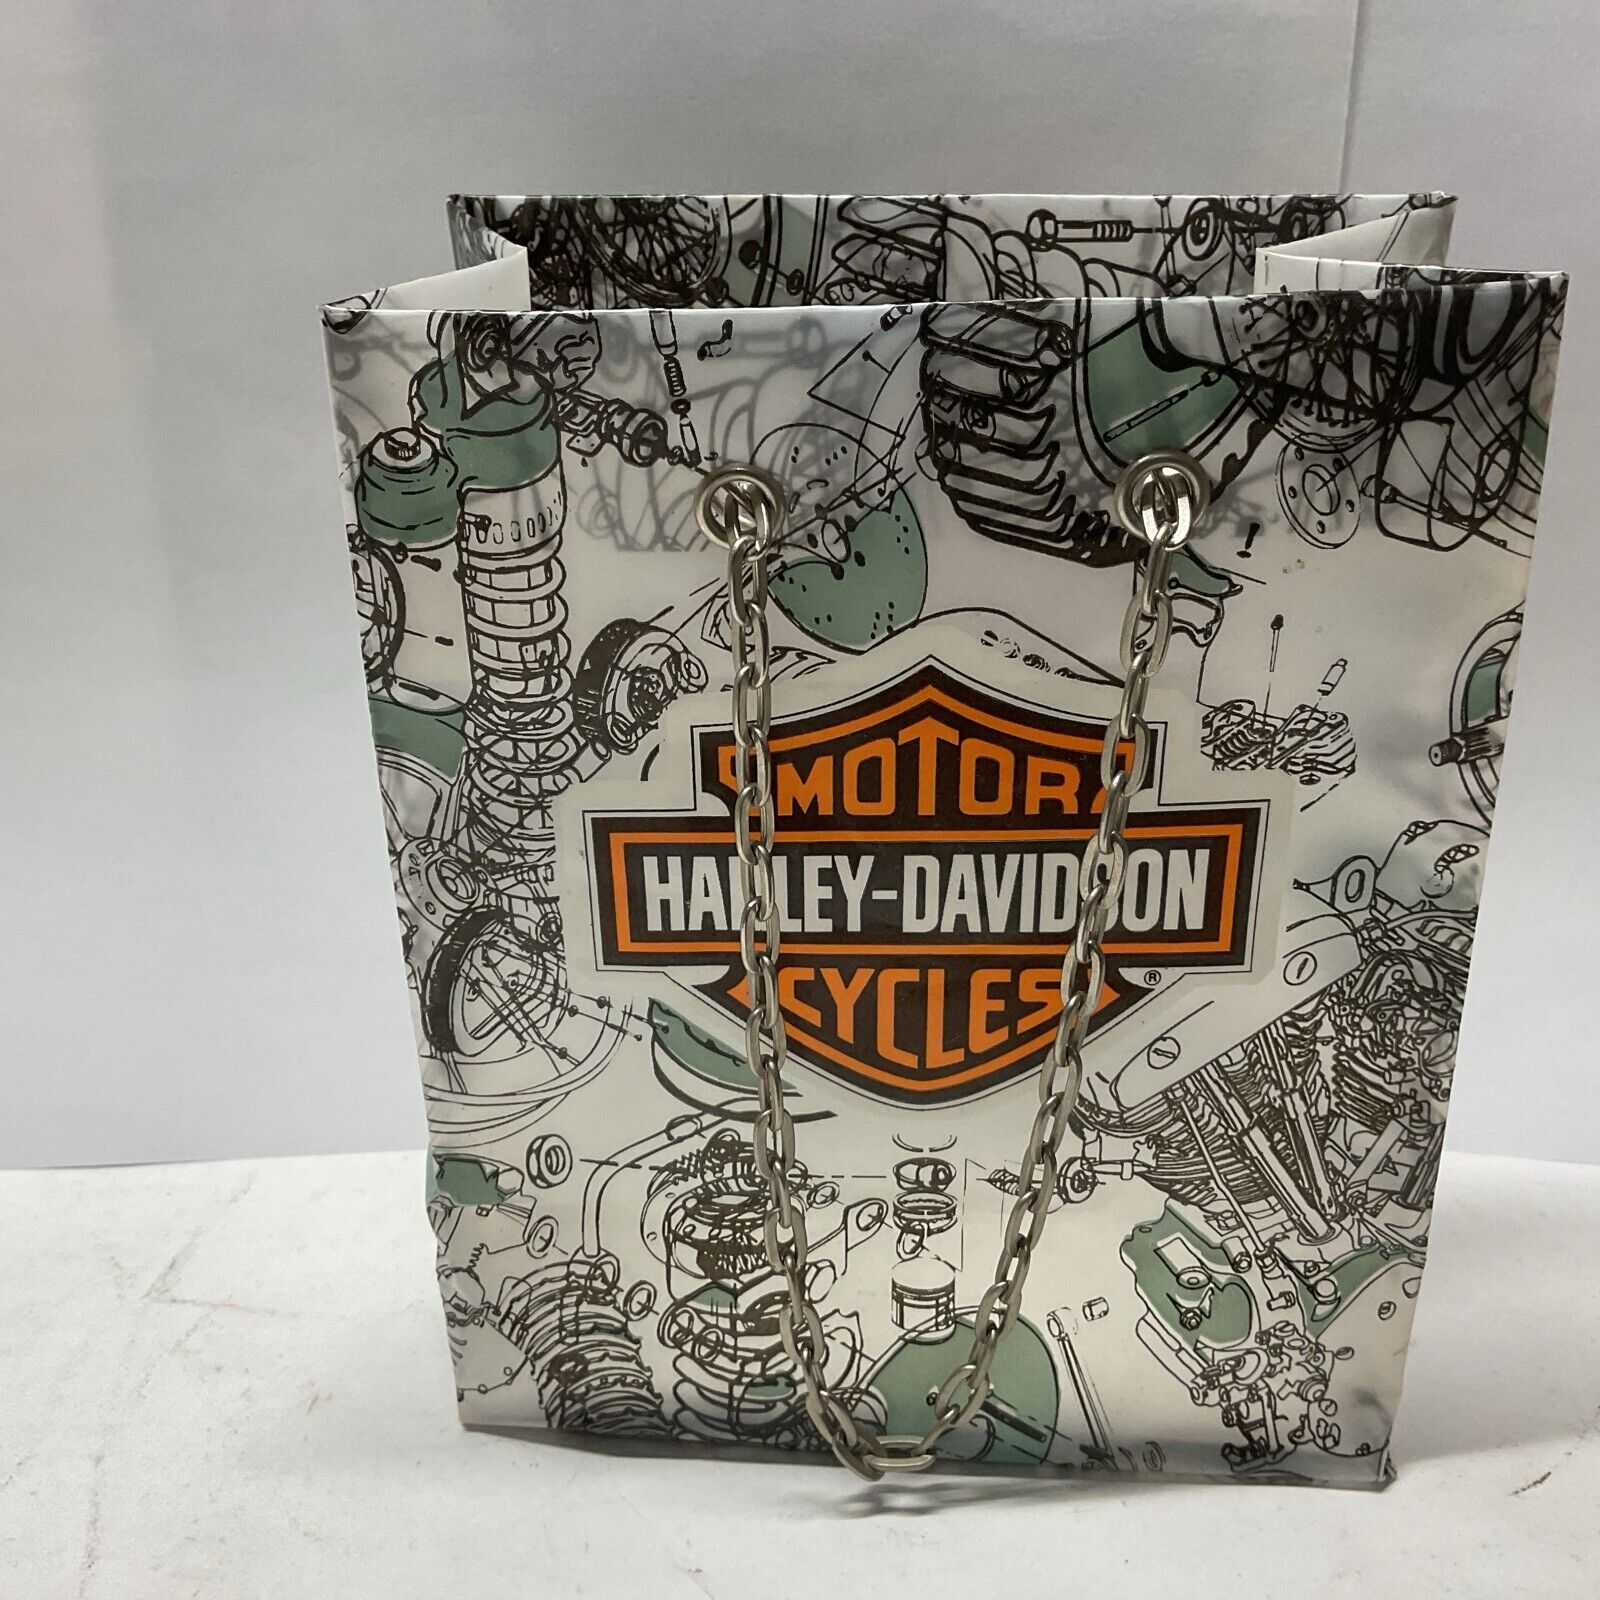 Hallmark Harley Davidson Motor Cycle 7 By 5” Gift Bag with Metal Chain Handle.